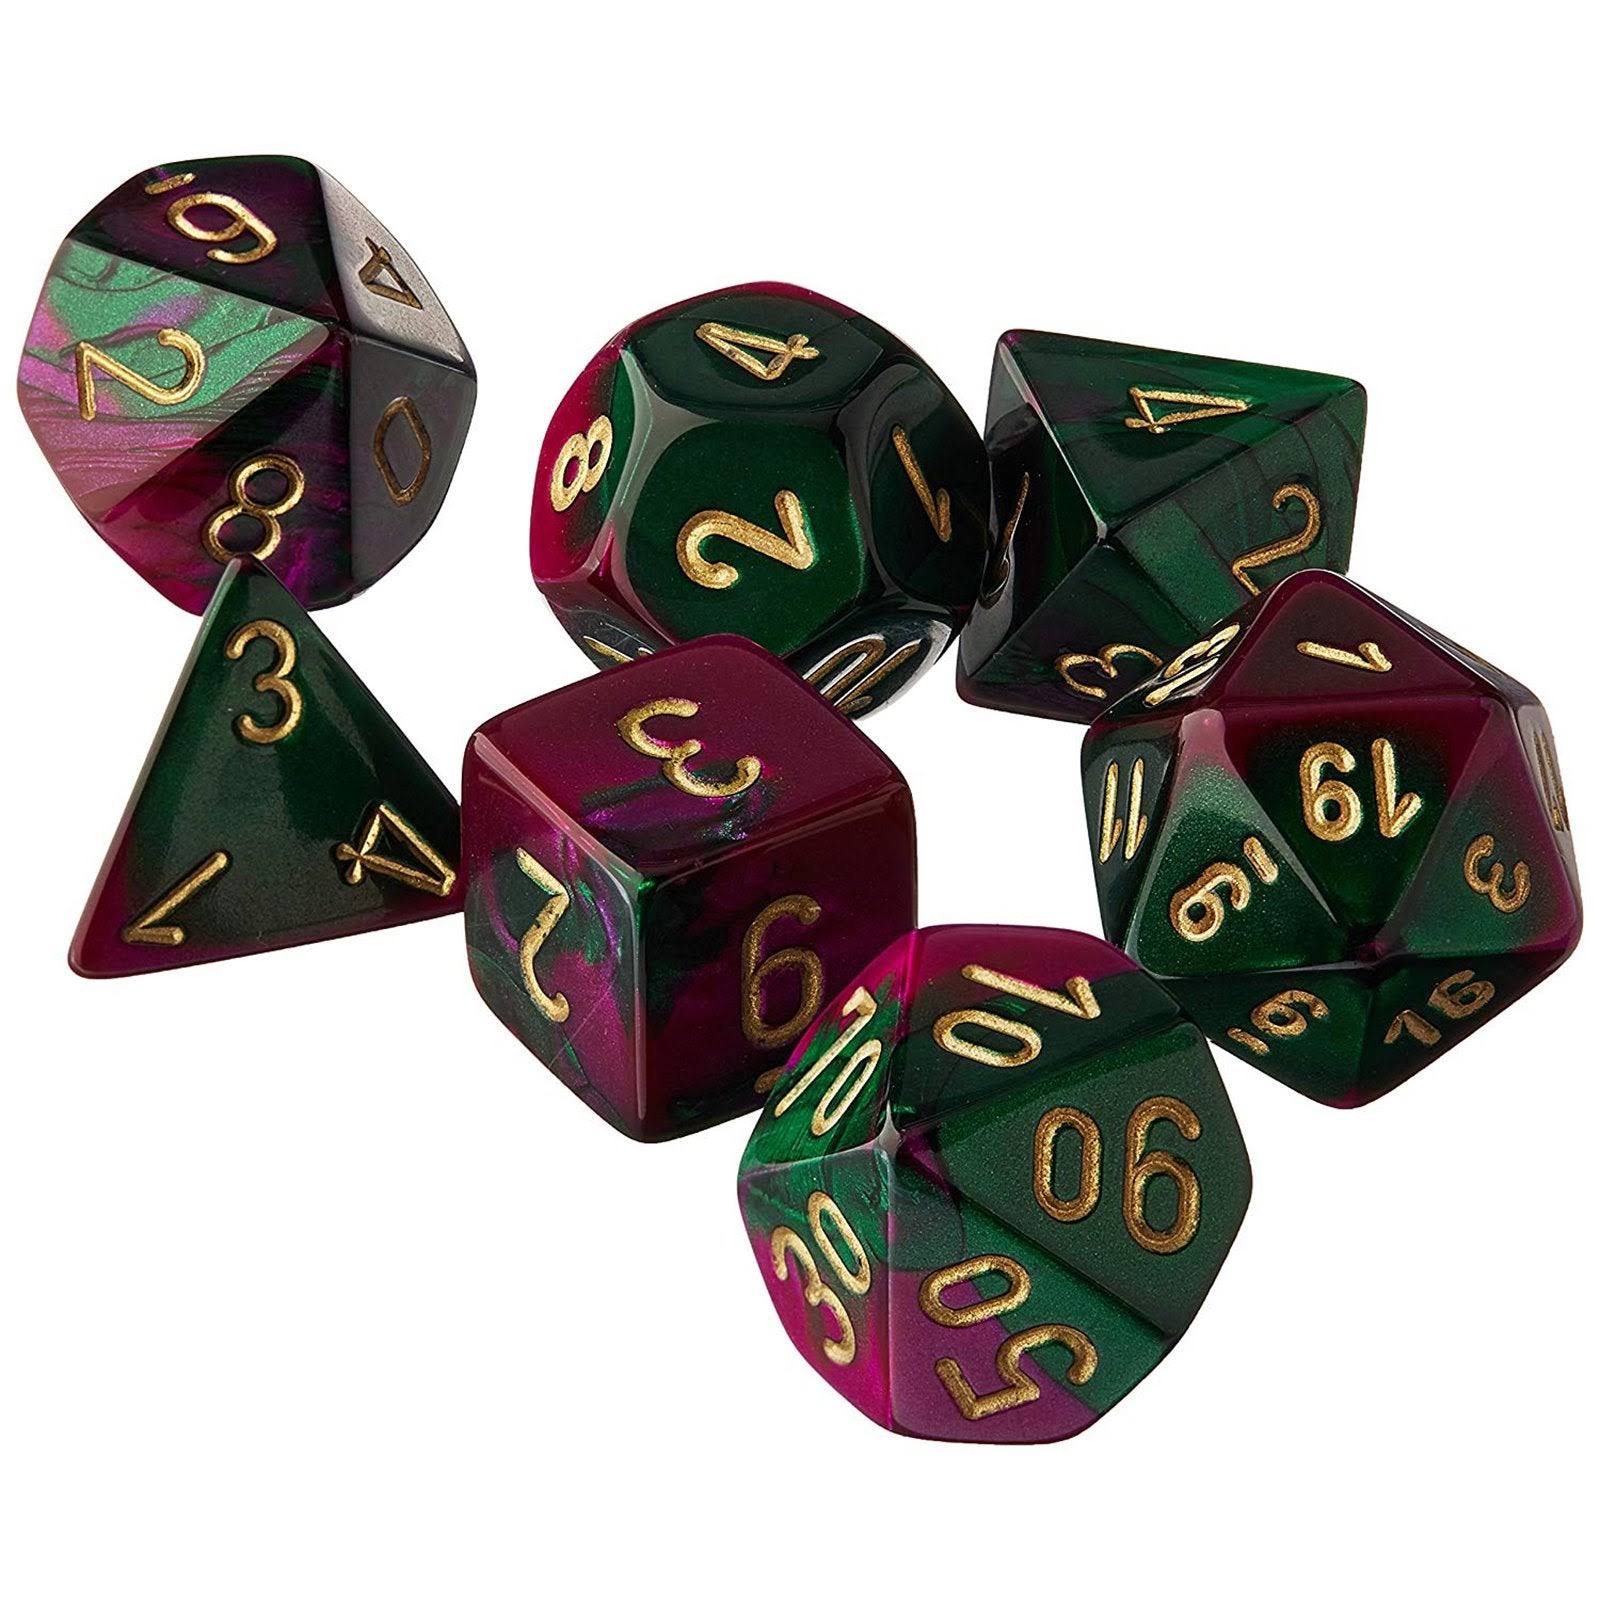 Chessex Gemini Poly 7 Dice Set: Green-purple/gold